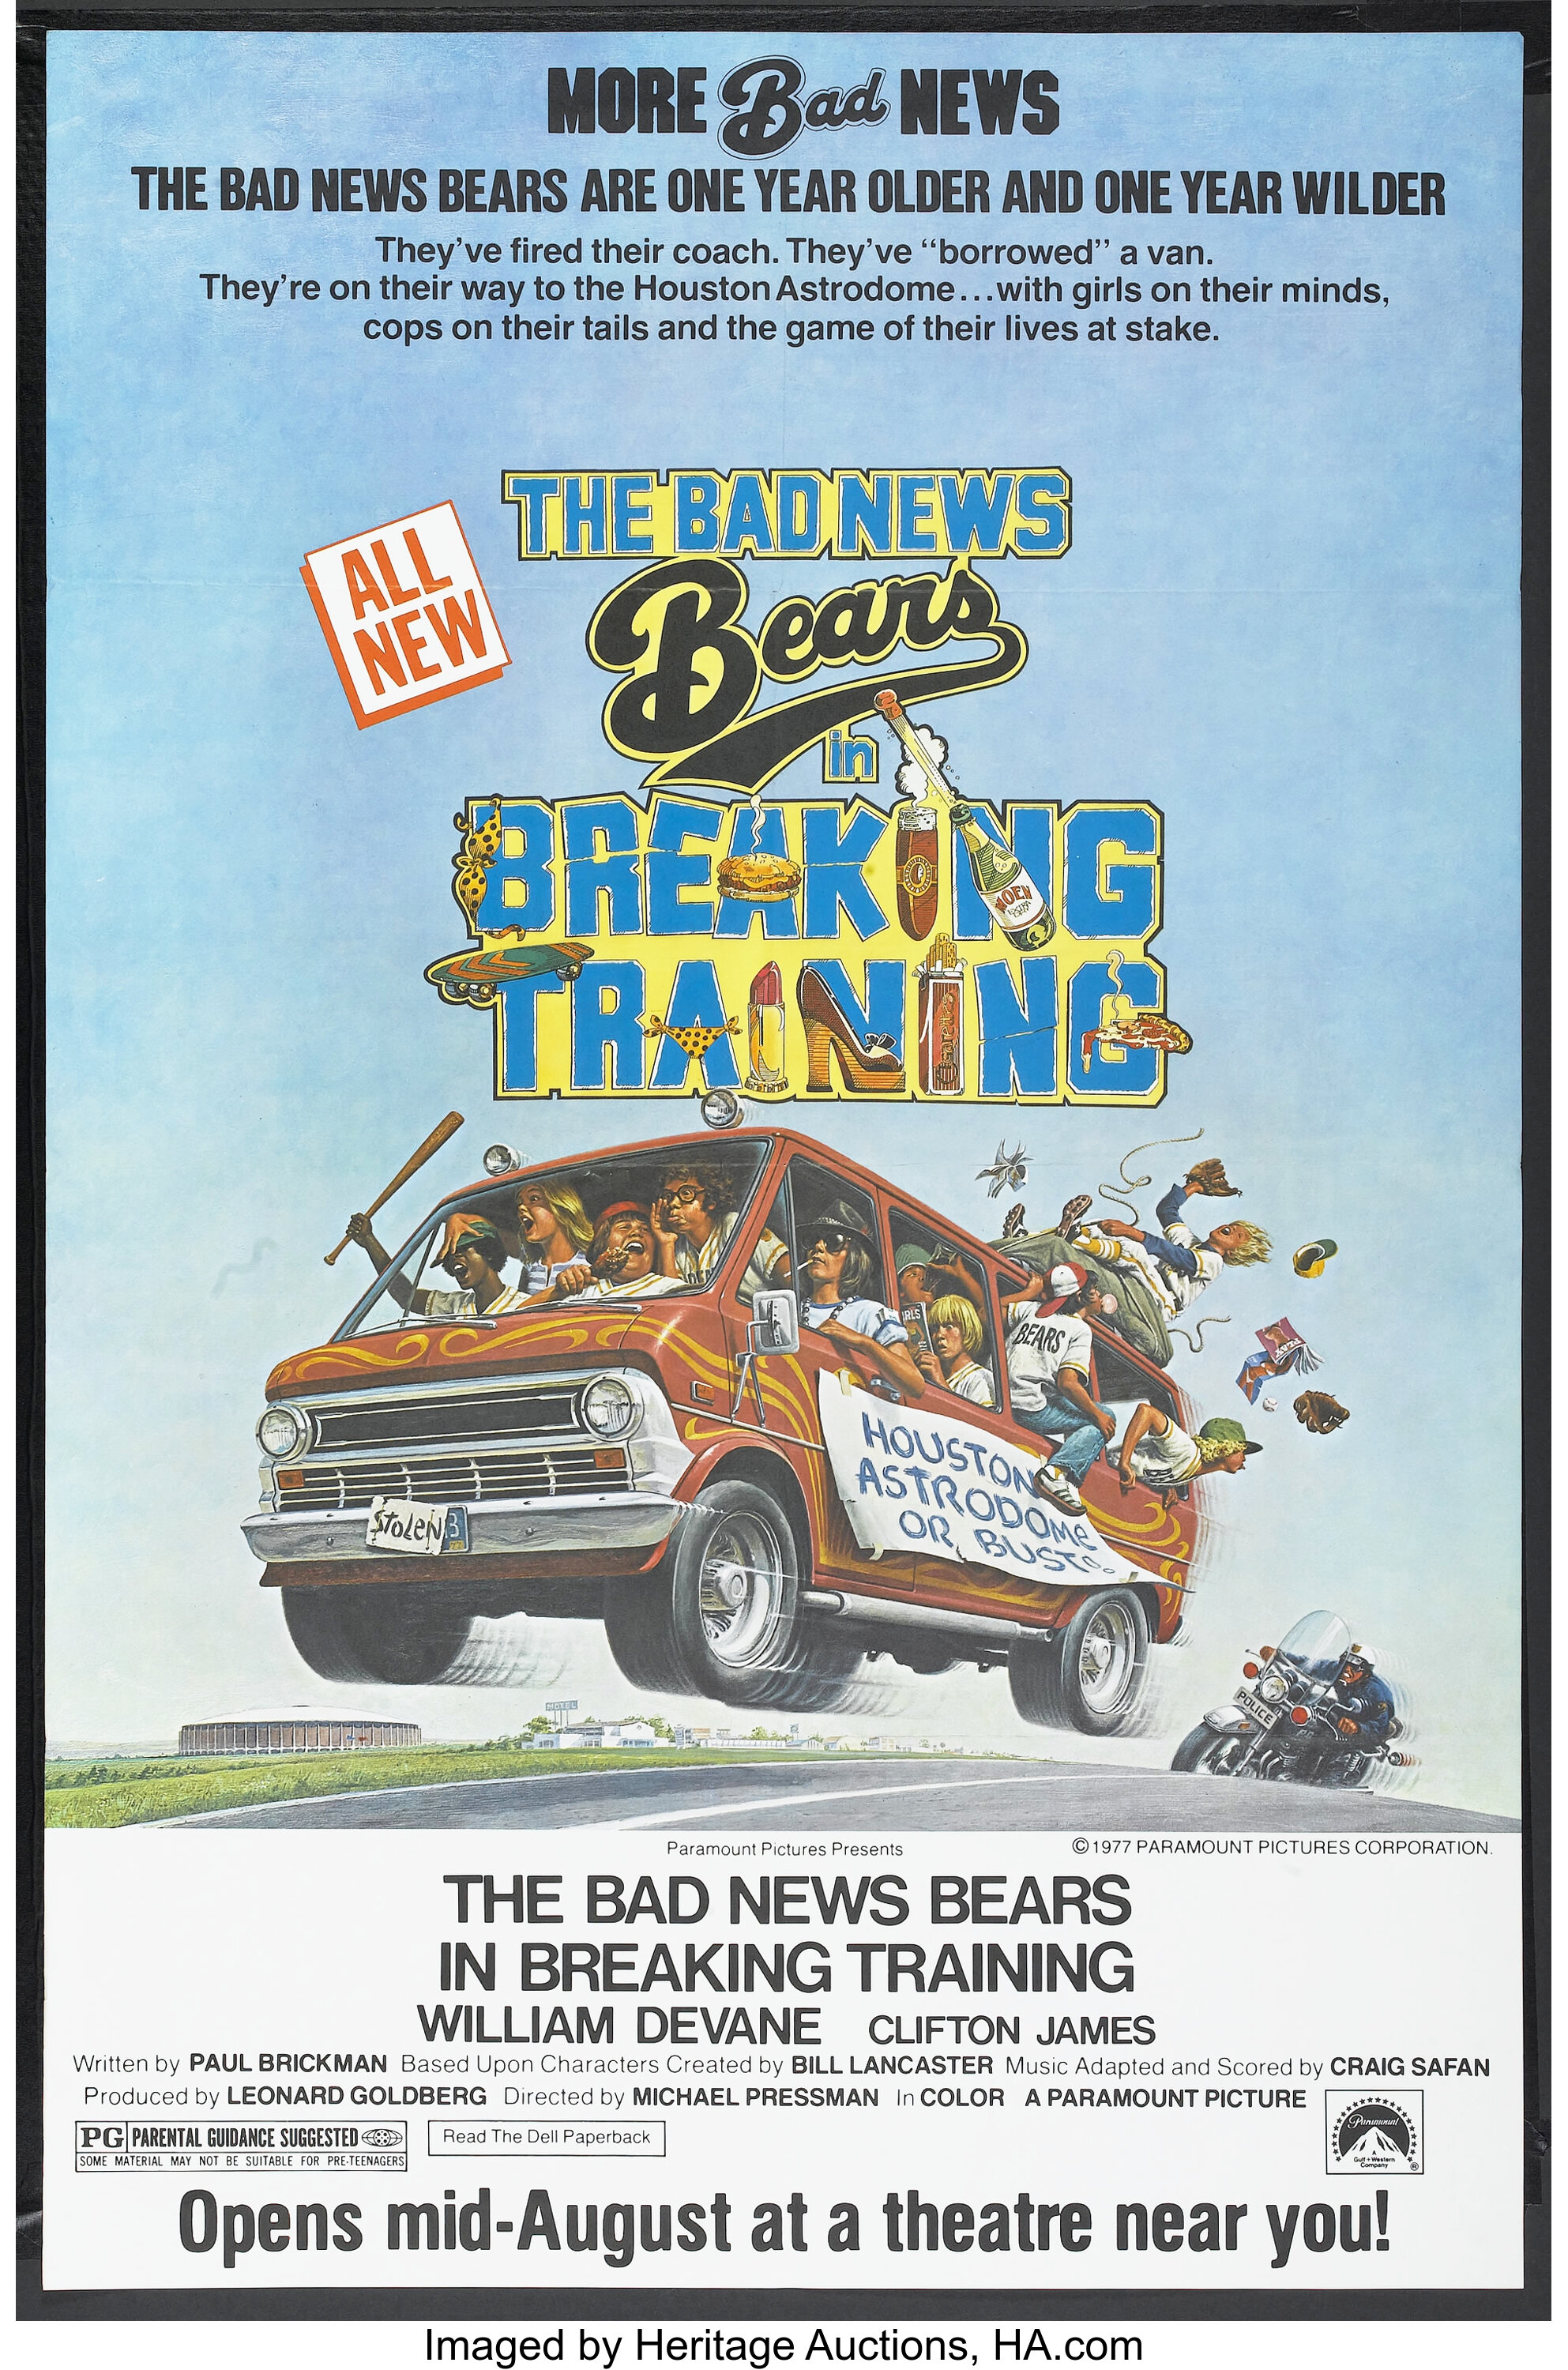 The Bad News Bears in Breaking Training (1977) - “Cast” credits - IMDb